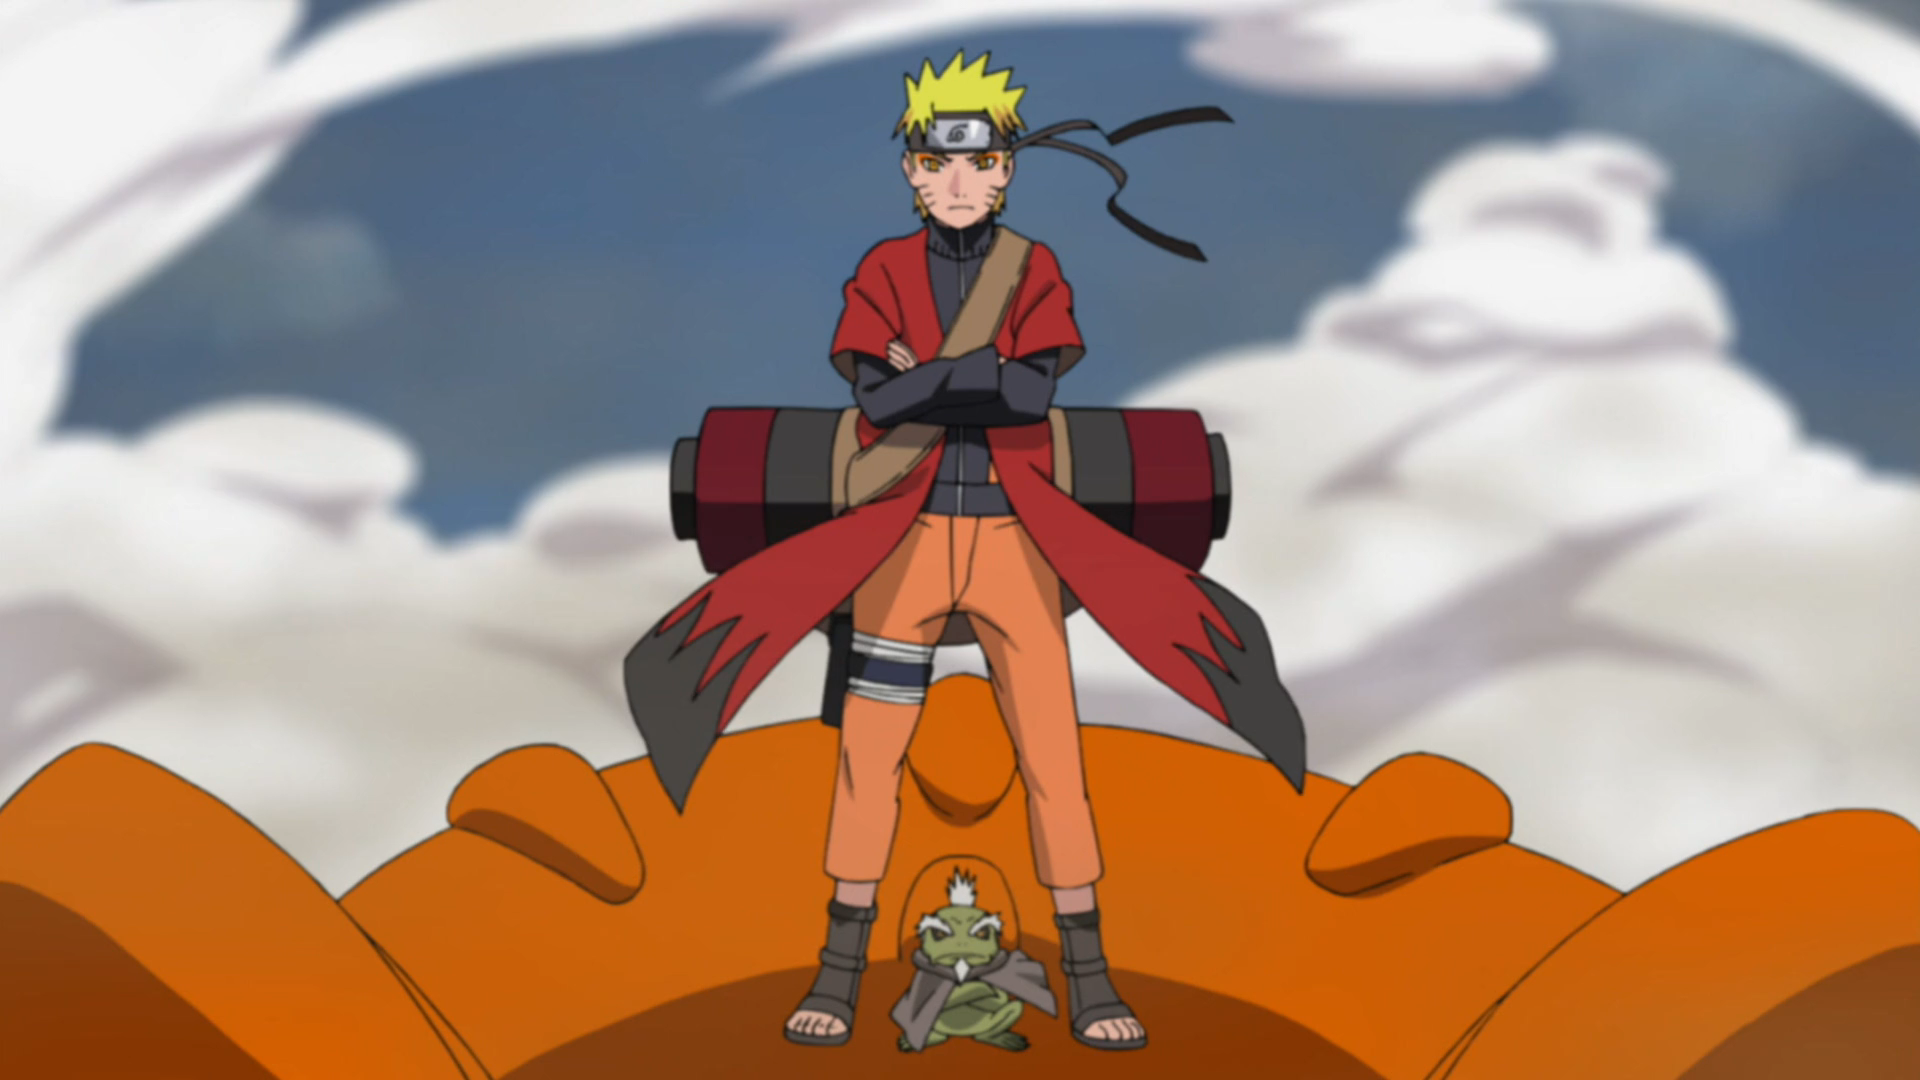 Naruto Shippuden O Filme Dublado Ultimate ninja 